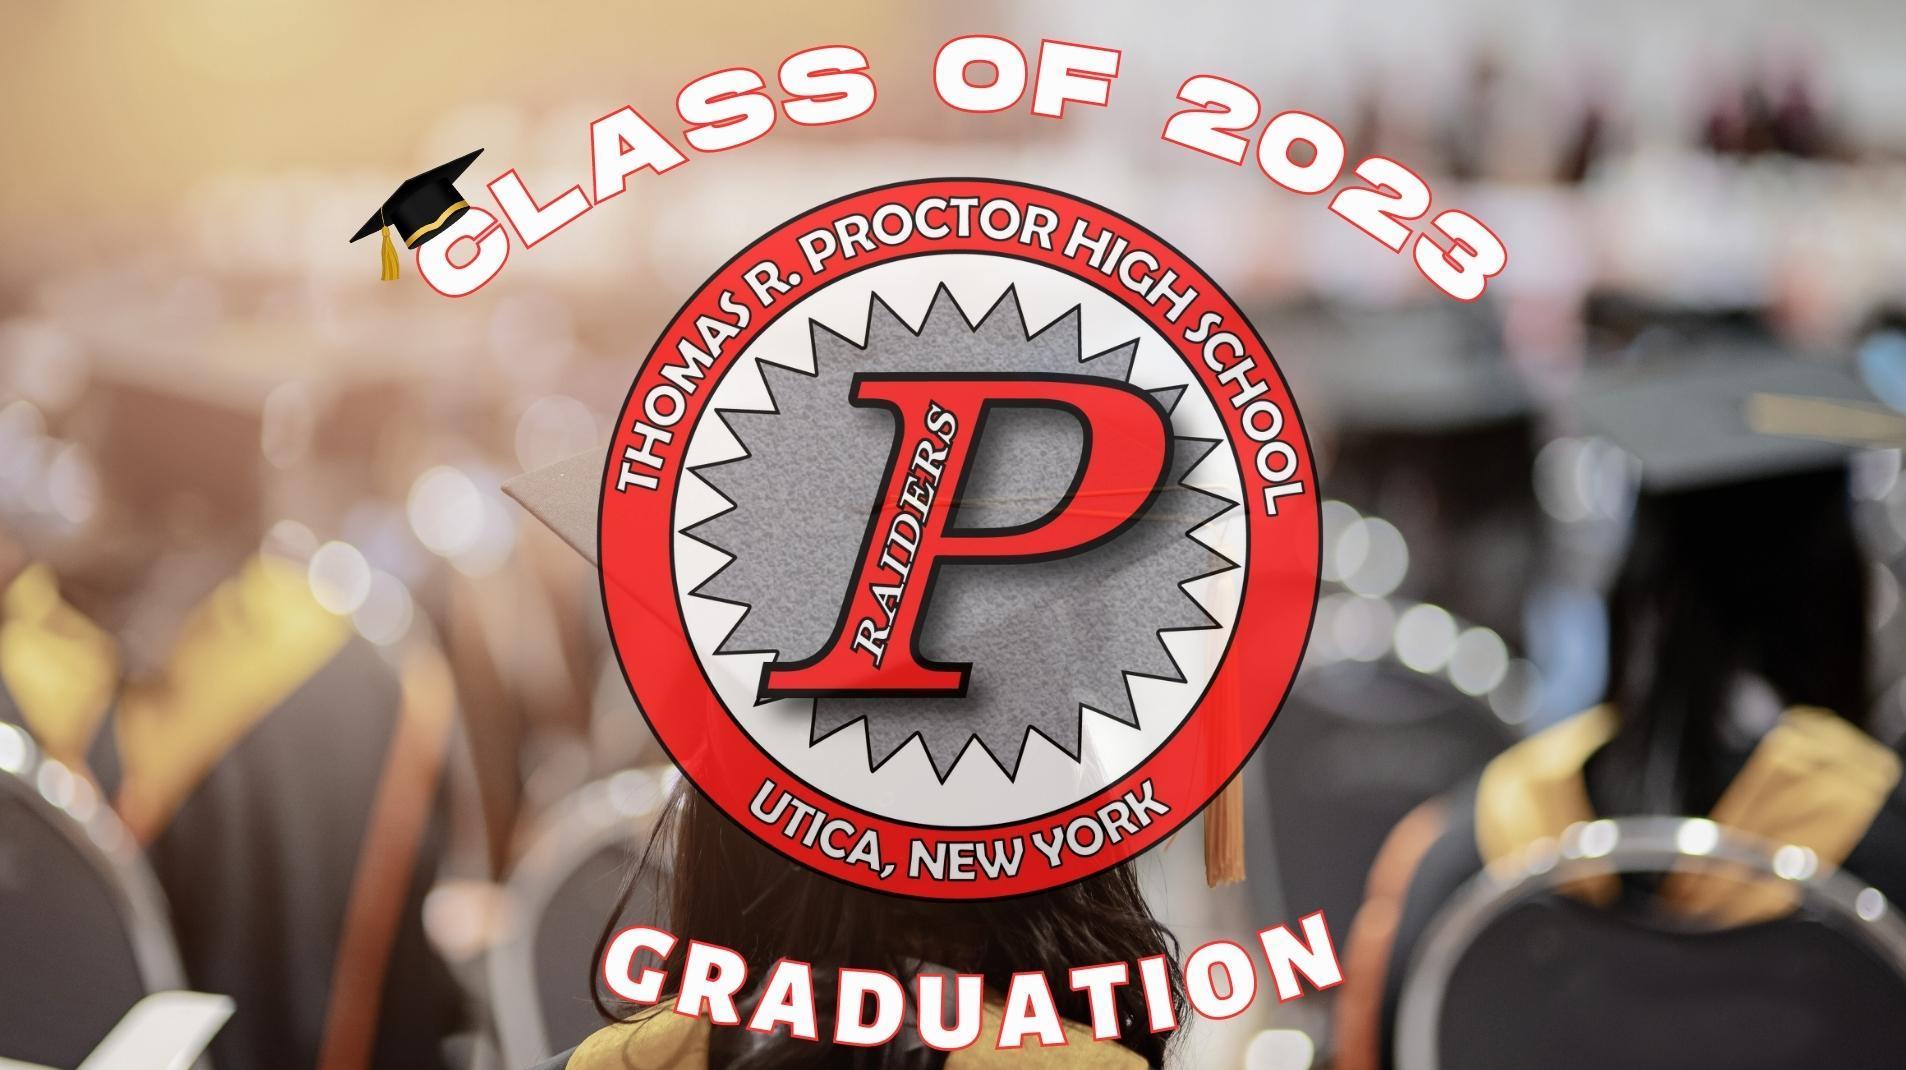 Thomas R. Proctor Class of 2023 Graduation on Livestream